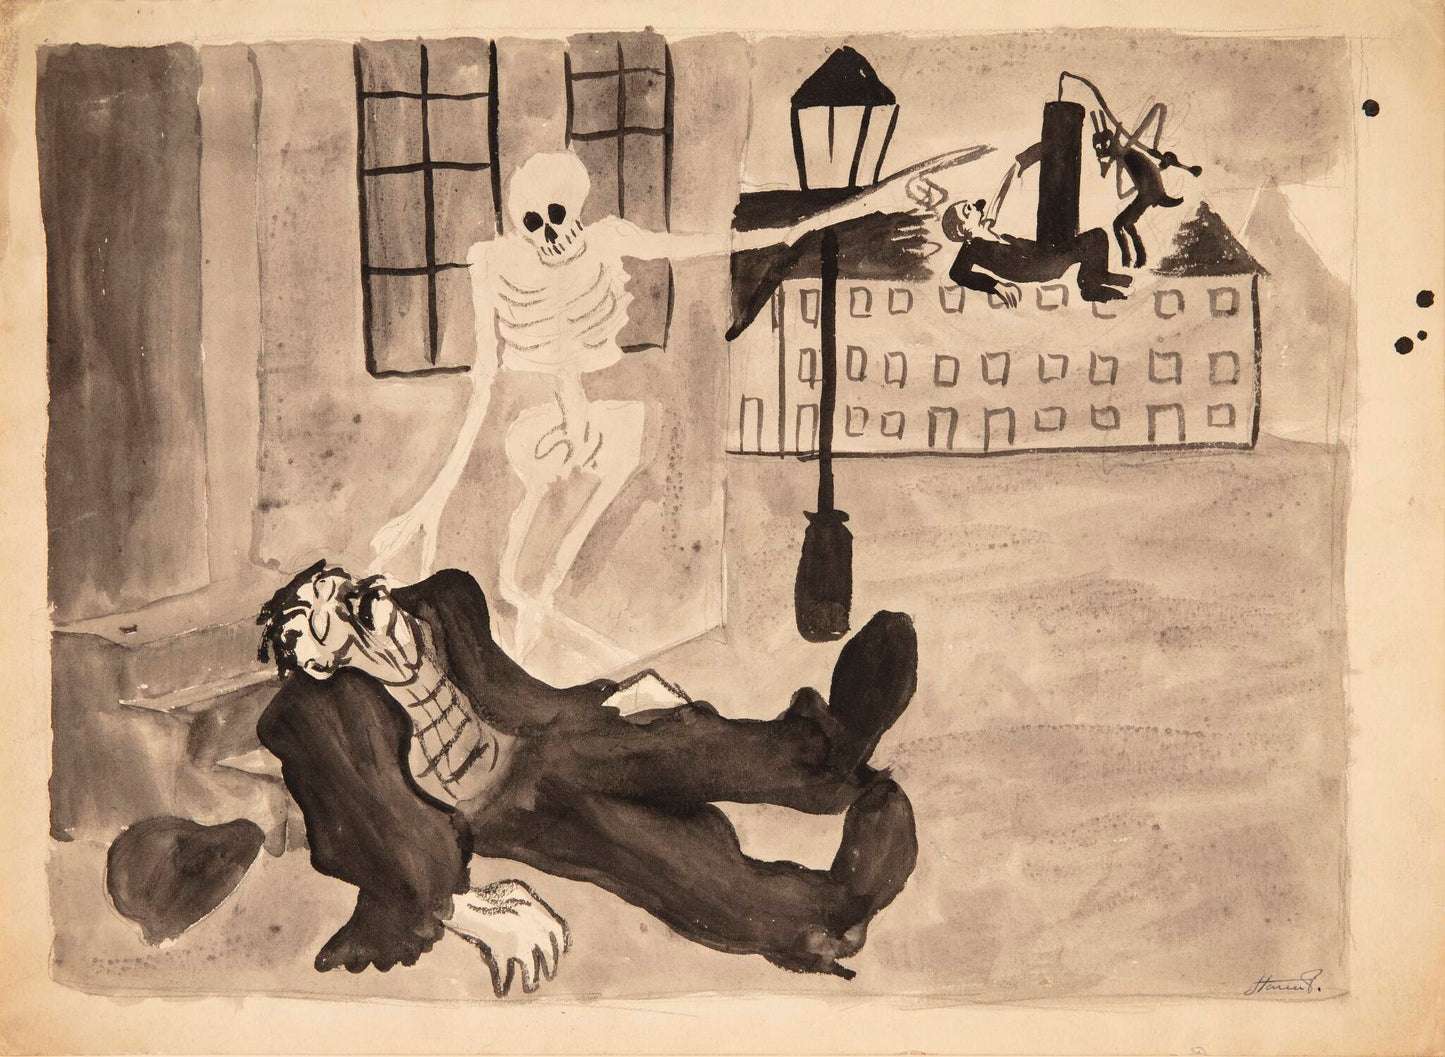 Døden og drankeren (Death and the drunkard) by Robert Storm Petersen - c. 1907